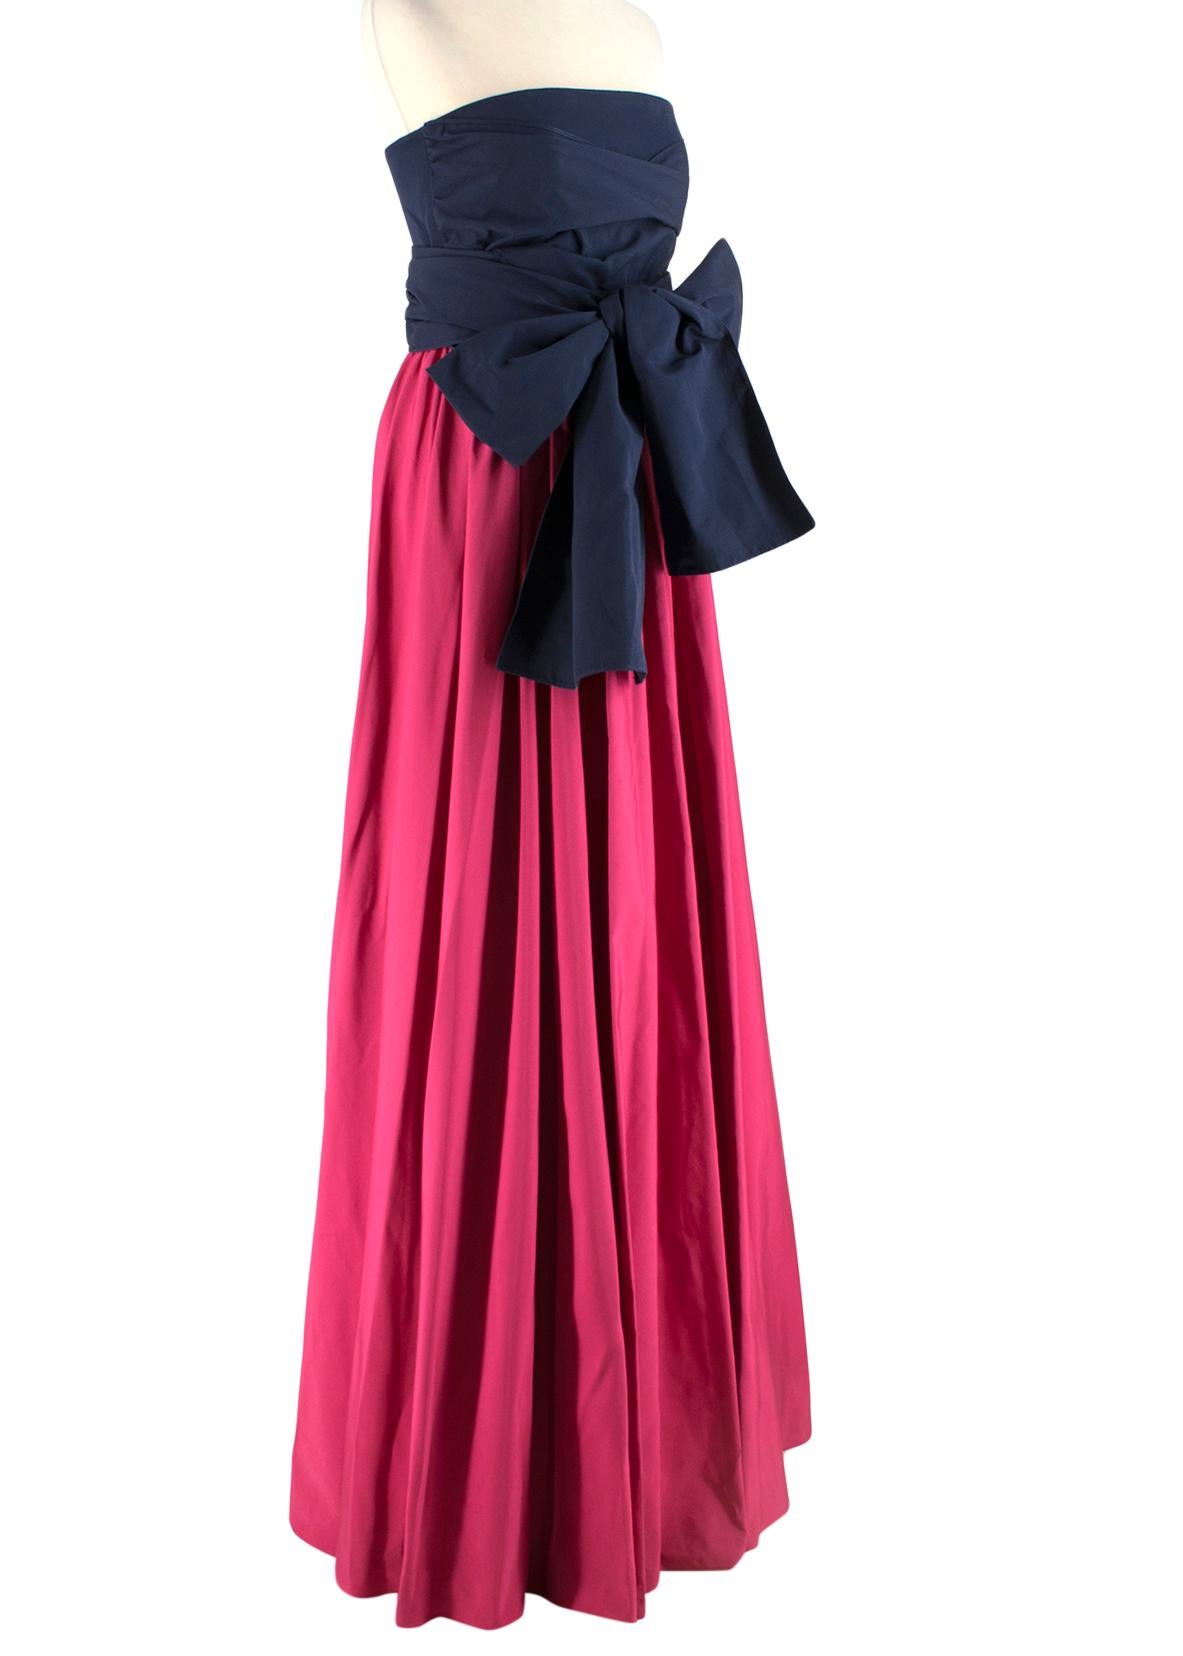 Carolina Herrera Navy & Pink Strapless Bow Tie Gown SIZE S 4